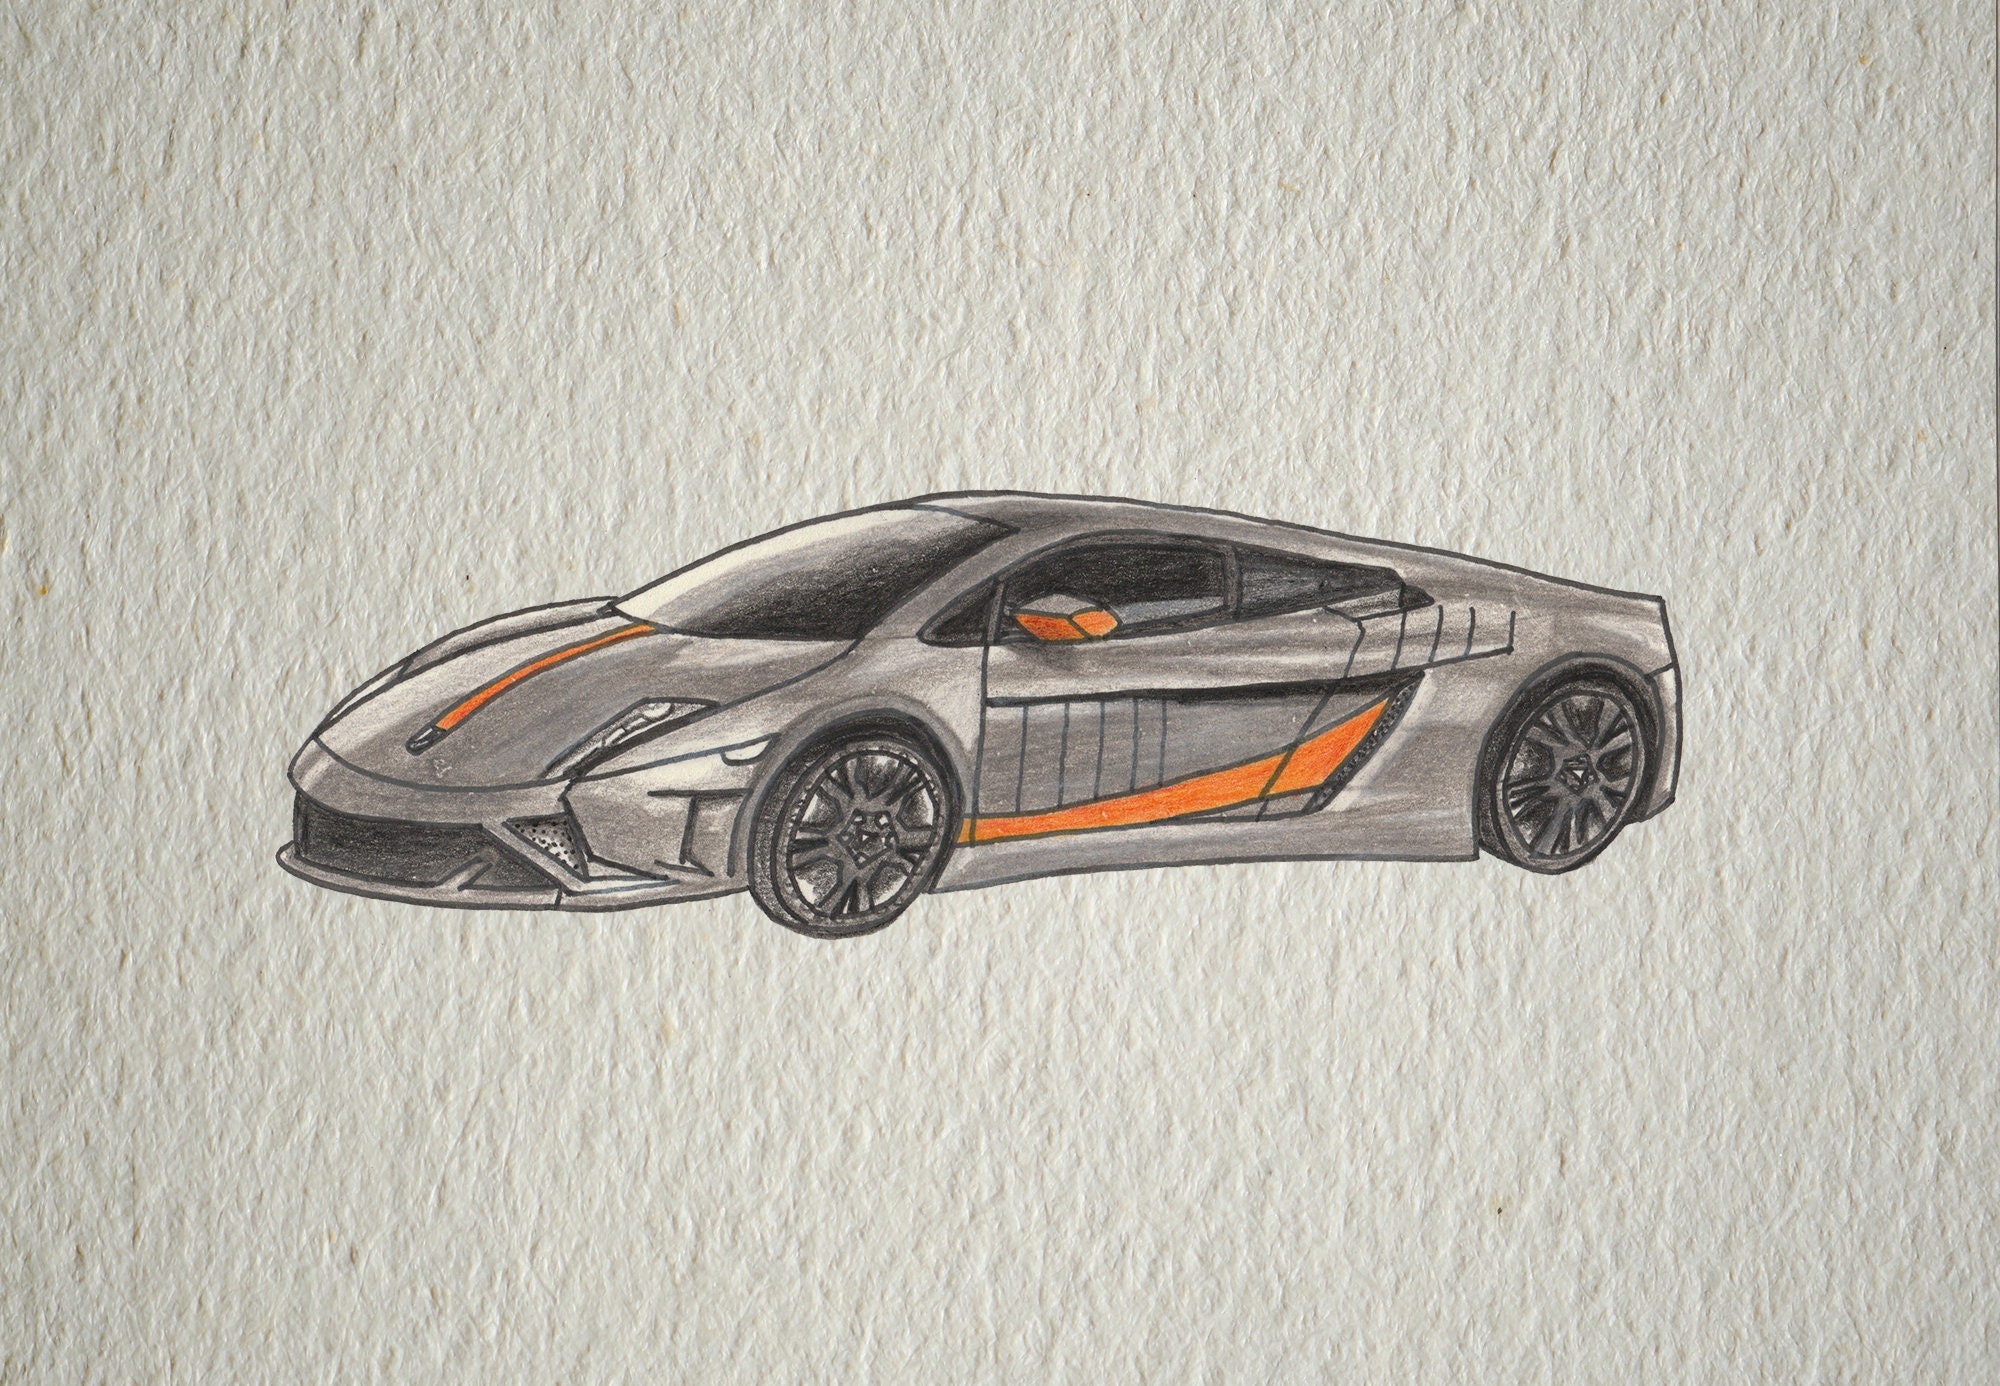 Lamborghini Ganador Concept Design Sketch - Car Body Design